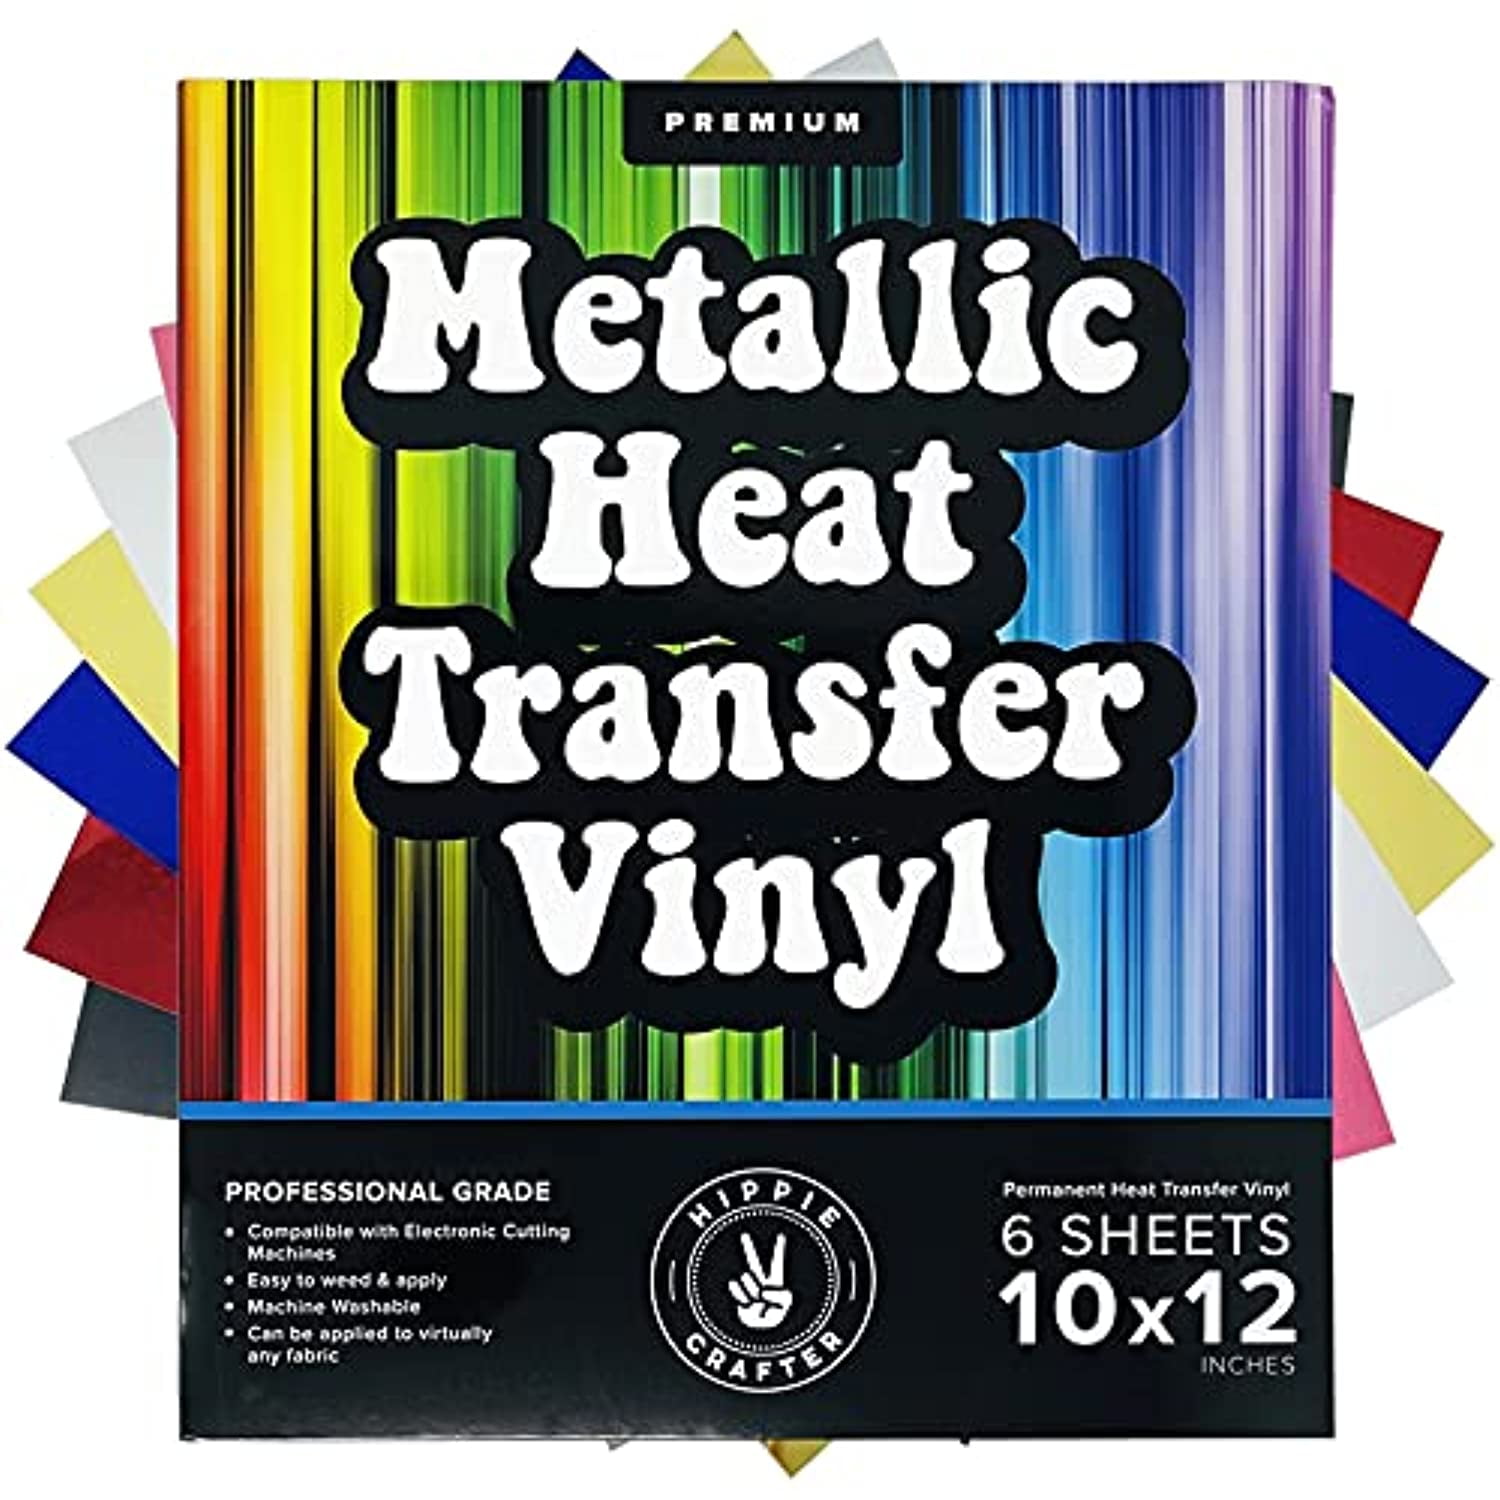 ThermoFlex Plus 15 Roll, Iron on Heat Transfer Vinyl, HTV (White, 5 Feet)